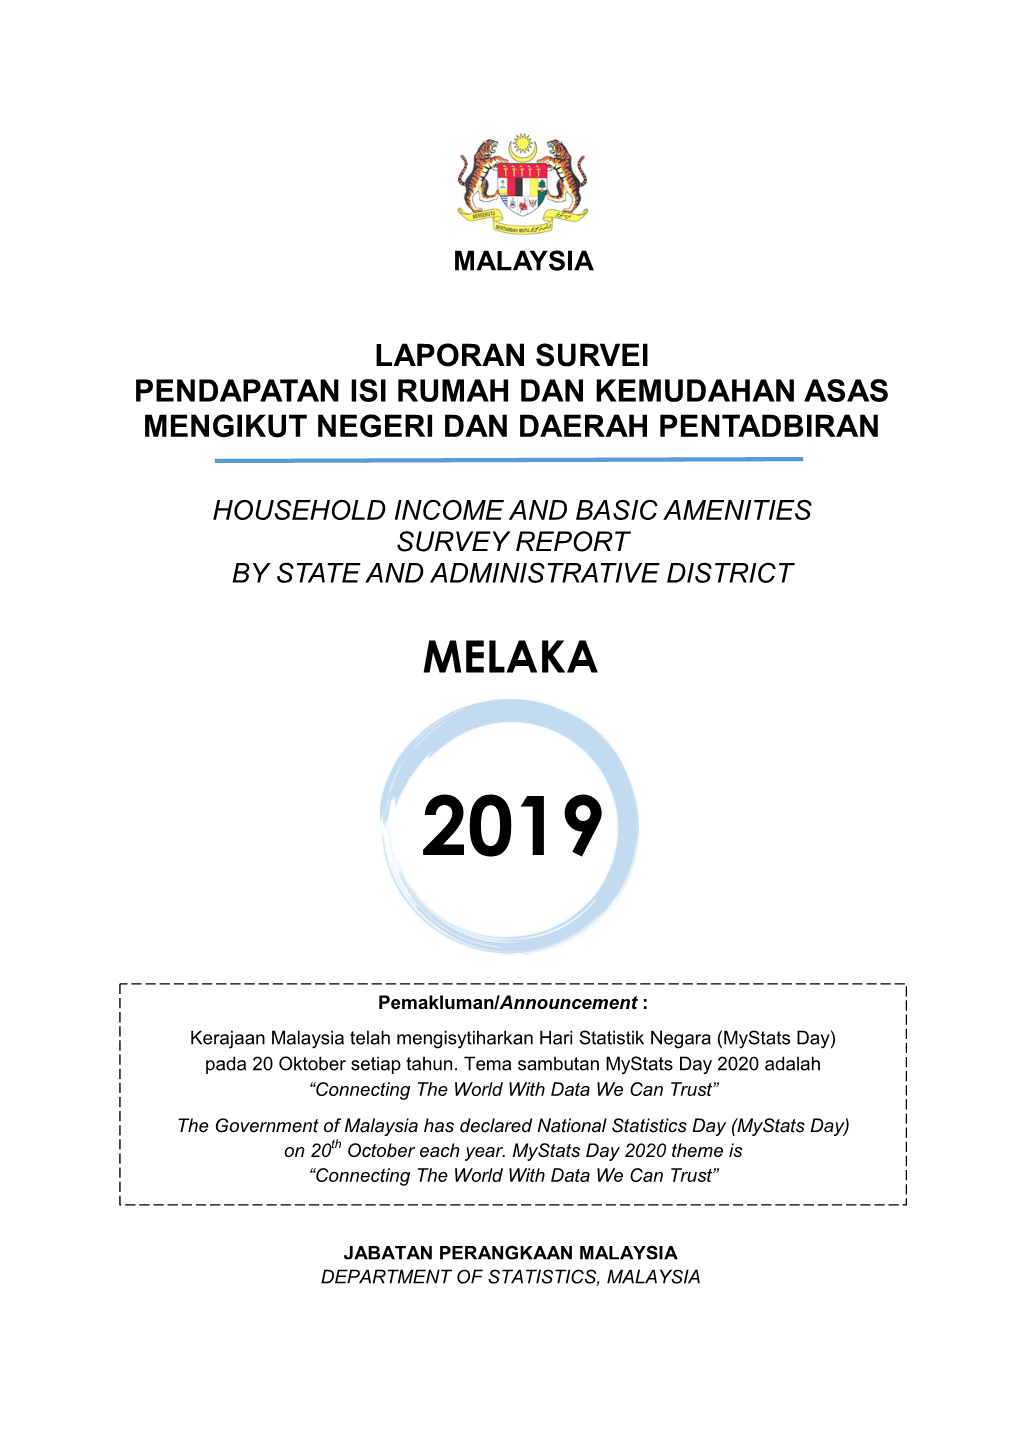 Household Income and Basic Amenities Melaka, 2019